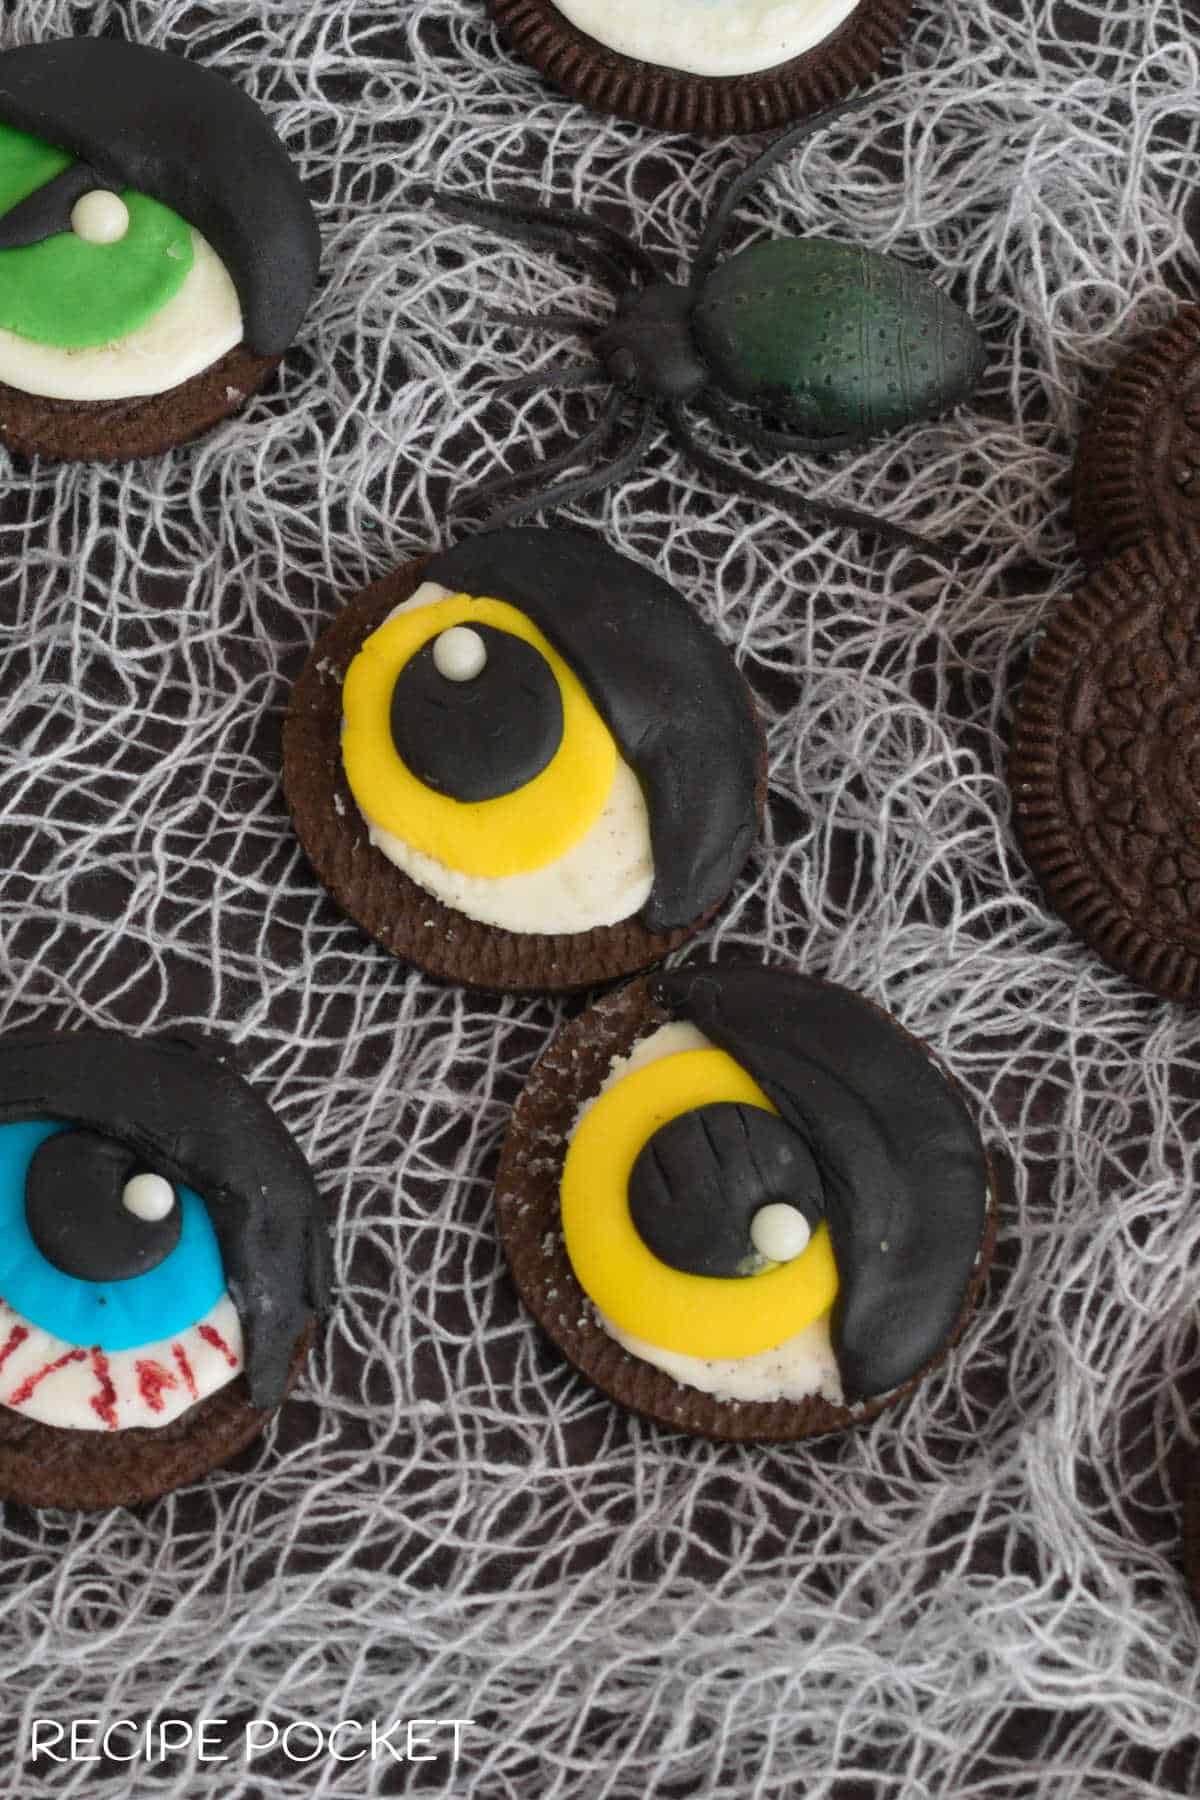 Yellow oreo eyeball cookies.